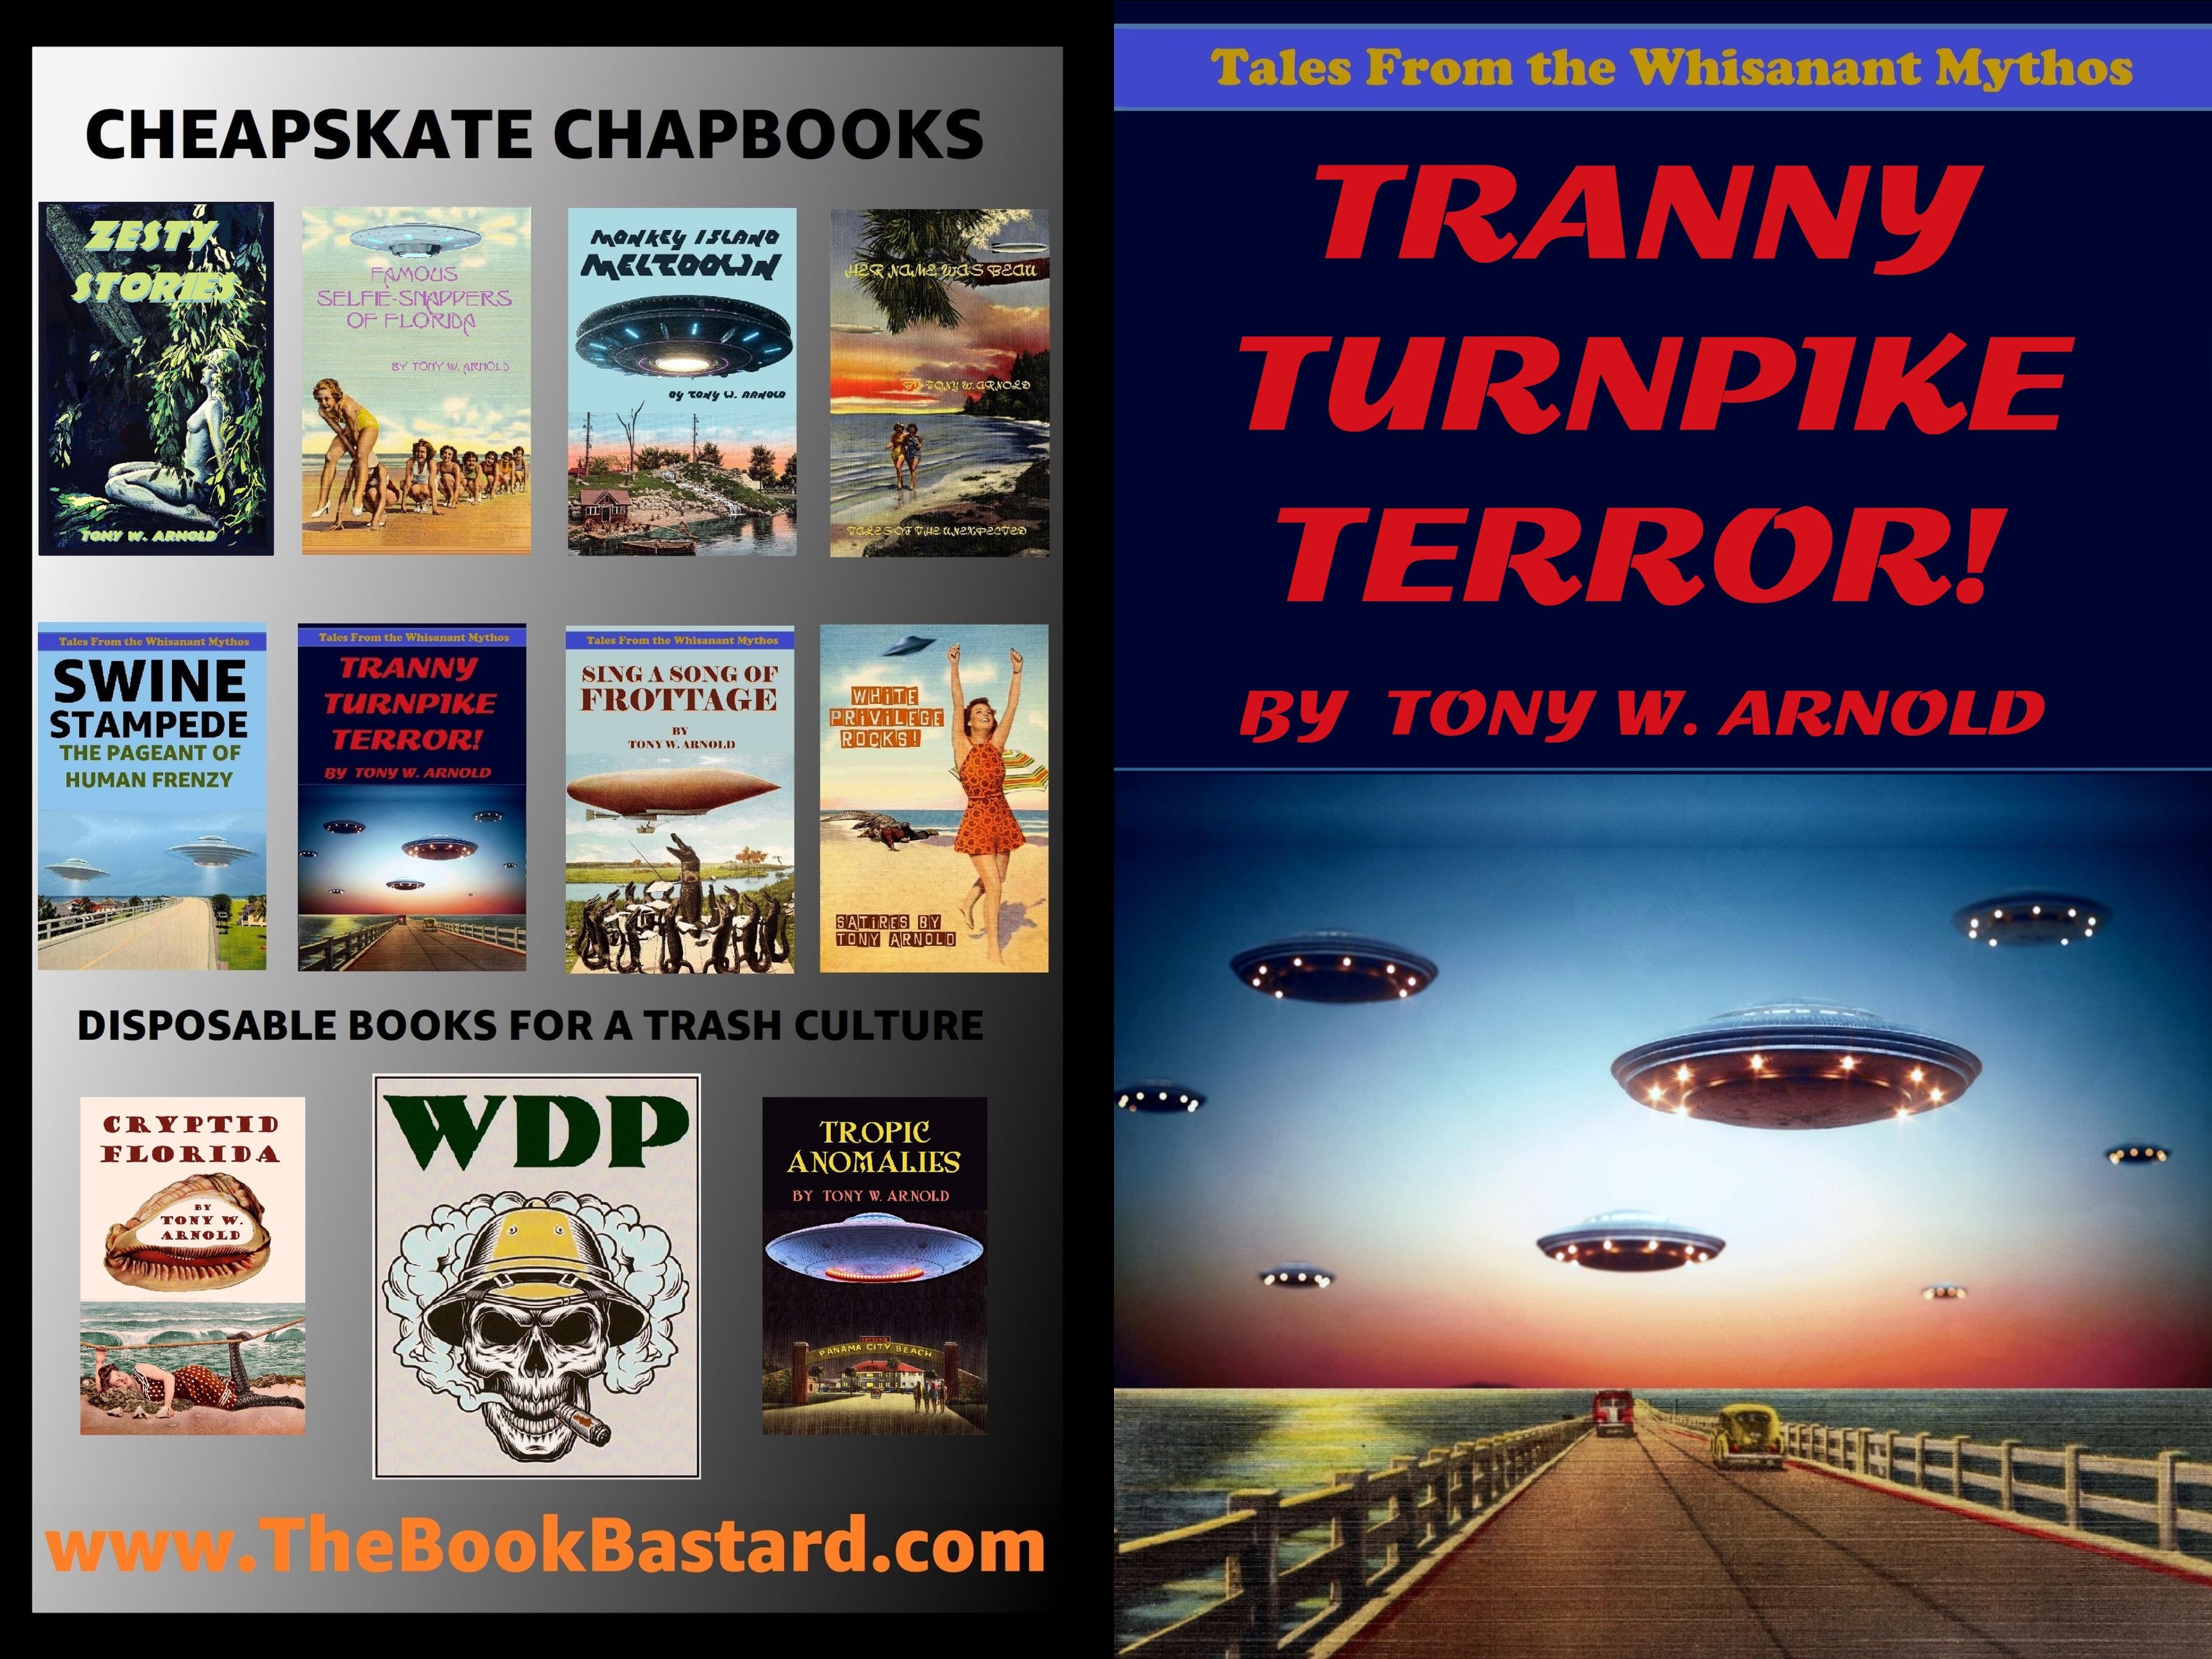 Tranny Turnpike Terror! cover image